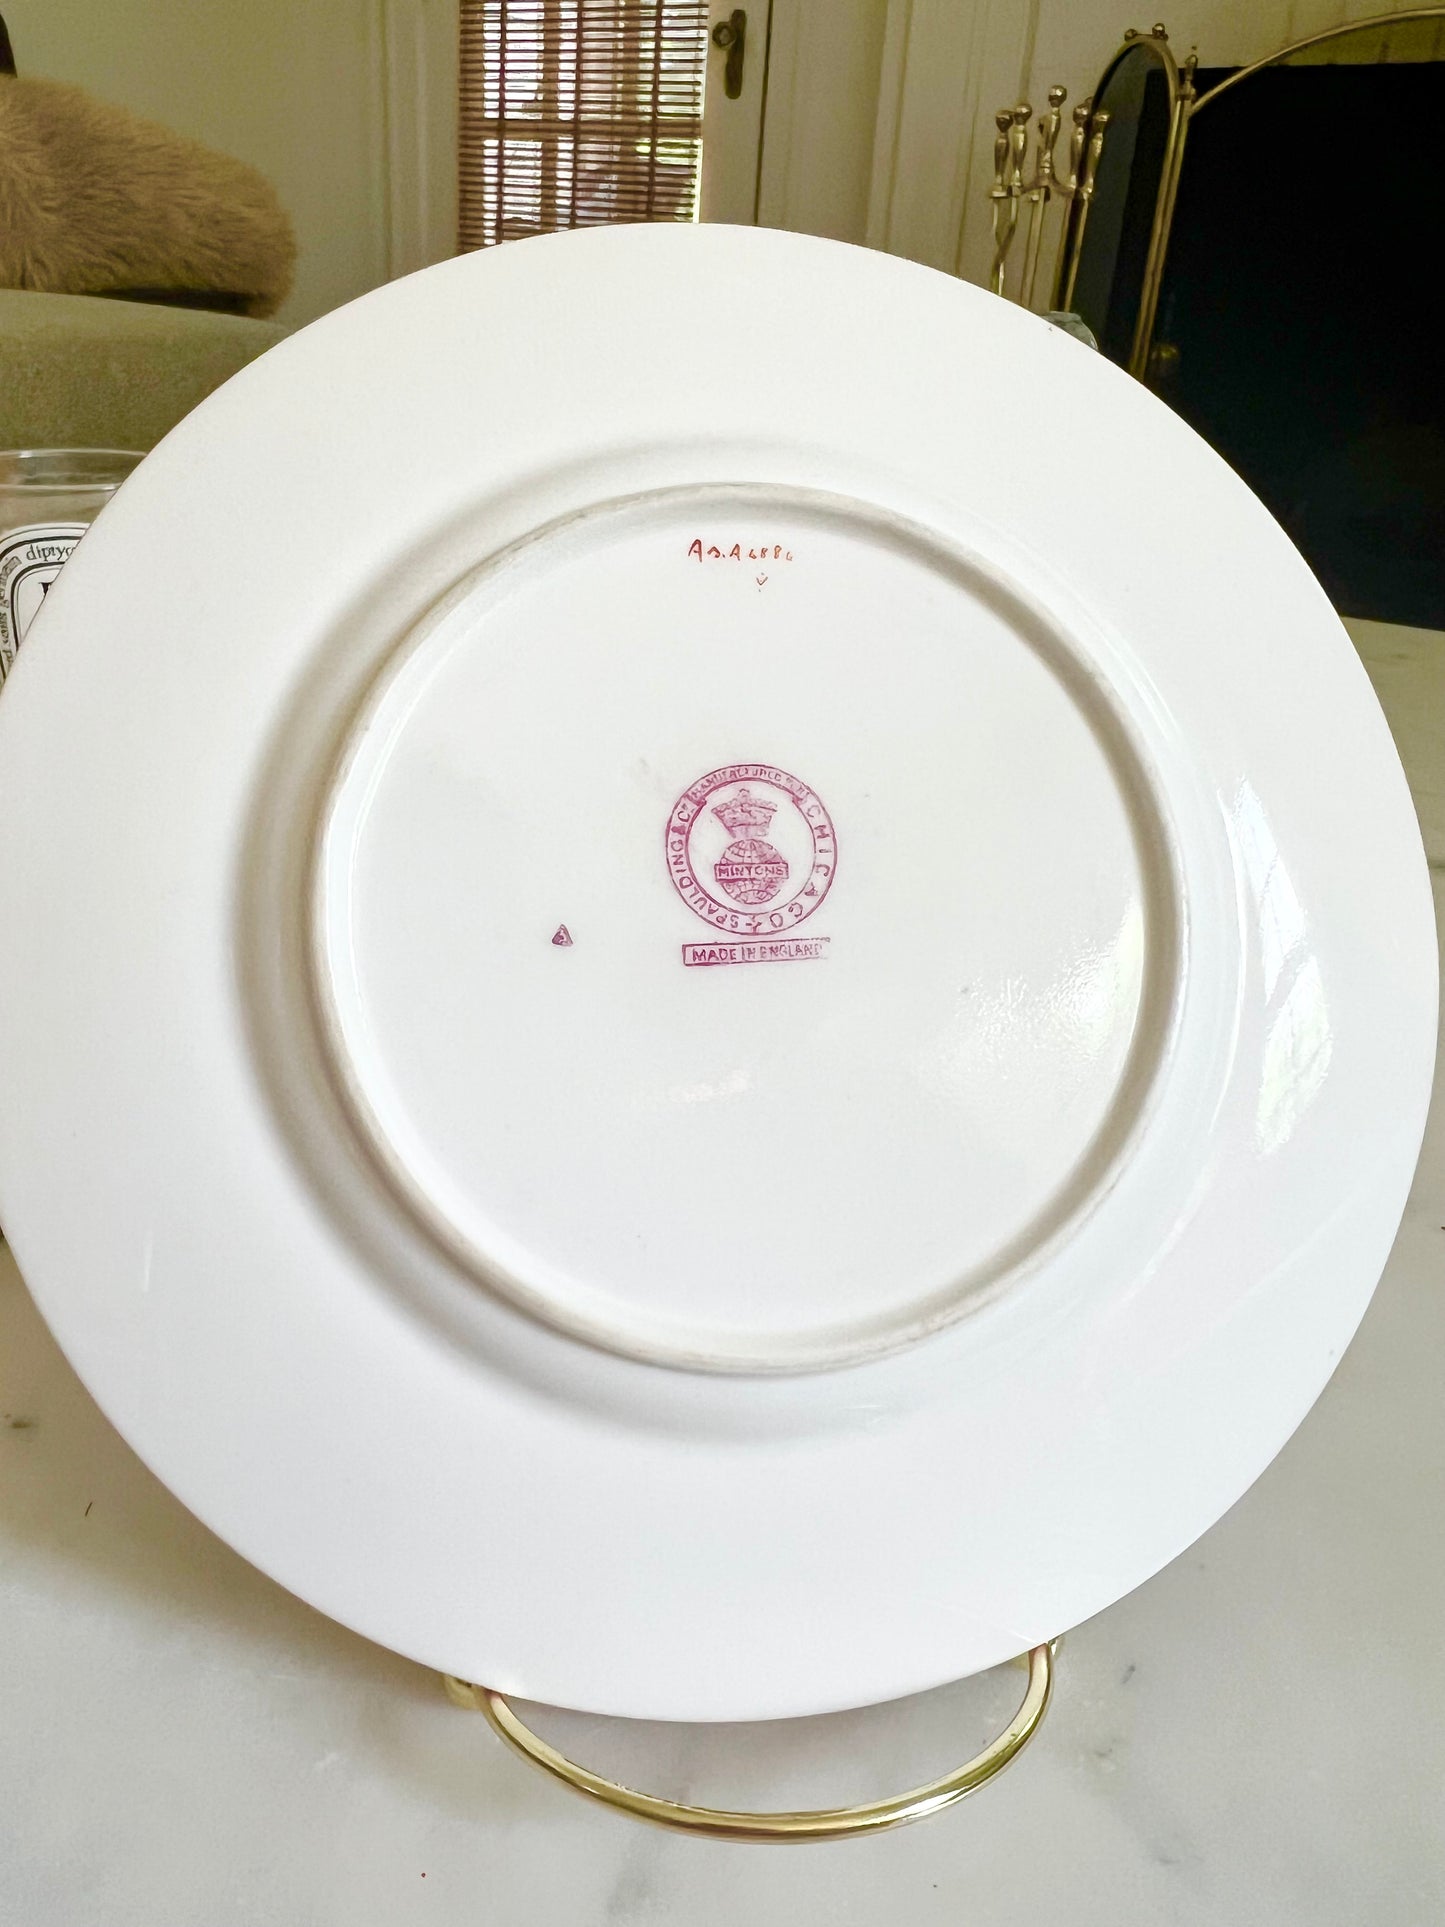 Stunning Rare Pink Set of 4 Antique Minton Dessert/Salad/Dinner Plates - Pristine (sold separate)